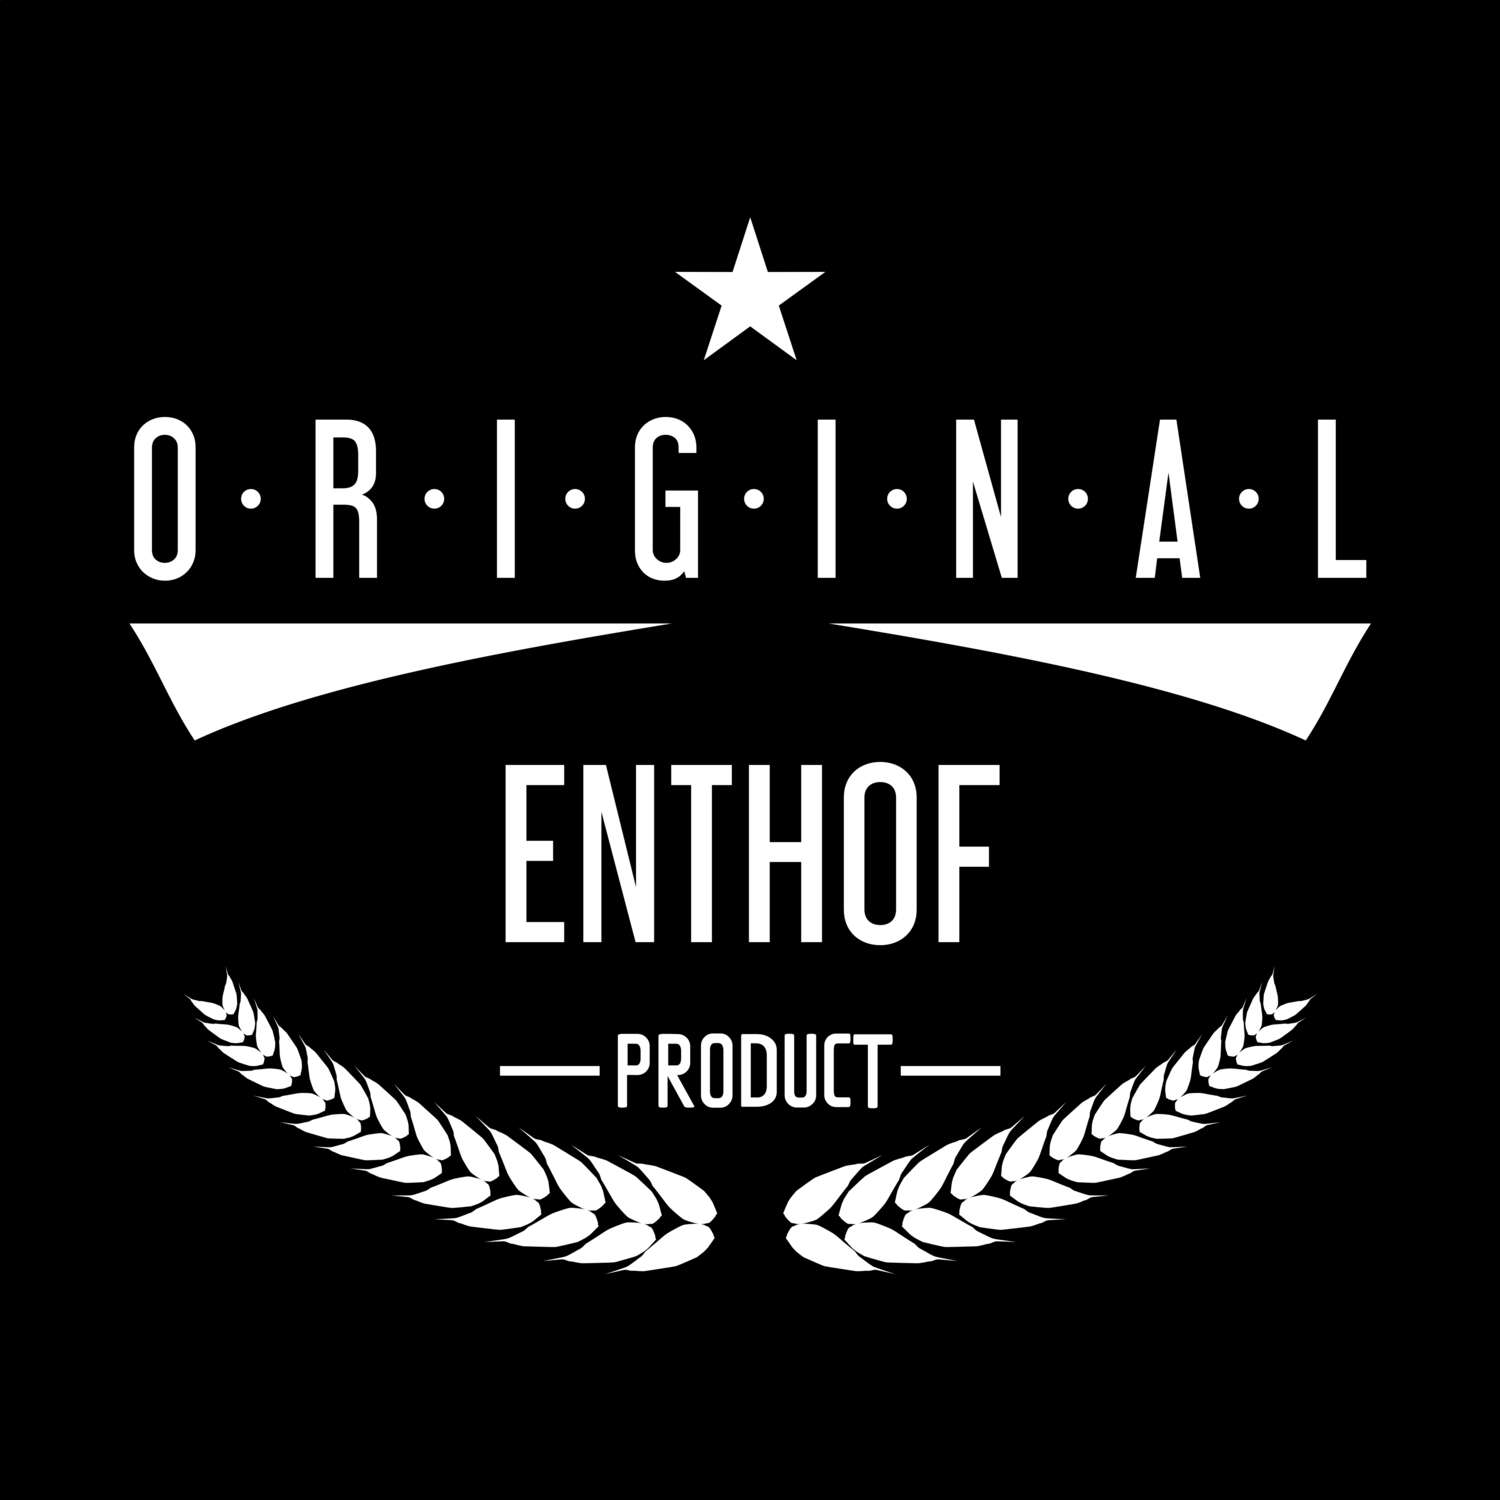 Enthof T-Shirt »Original Product«